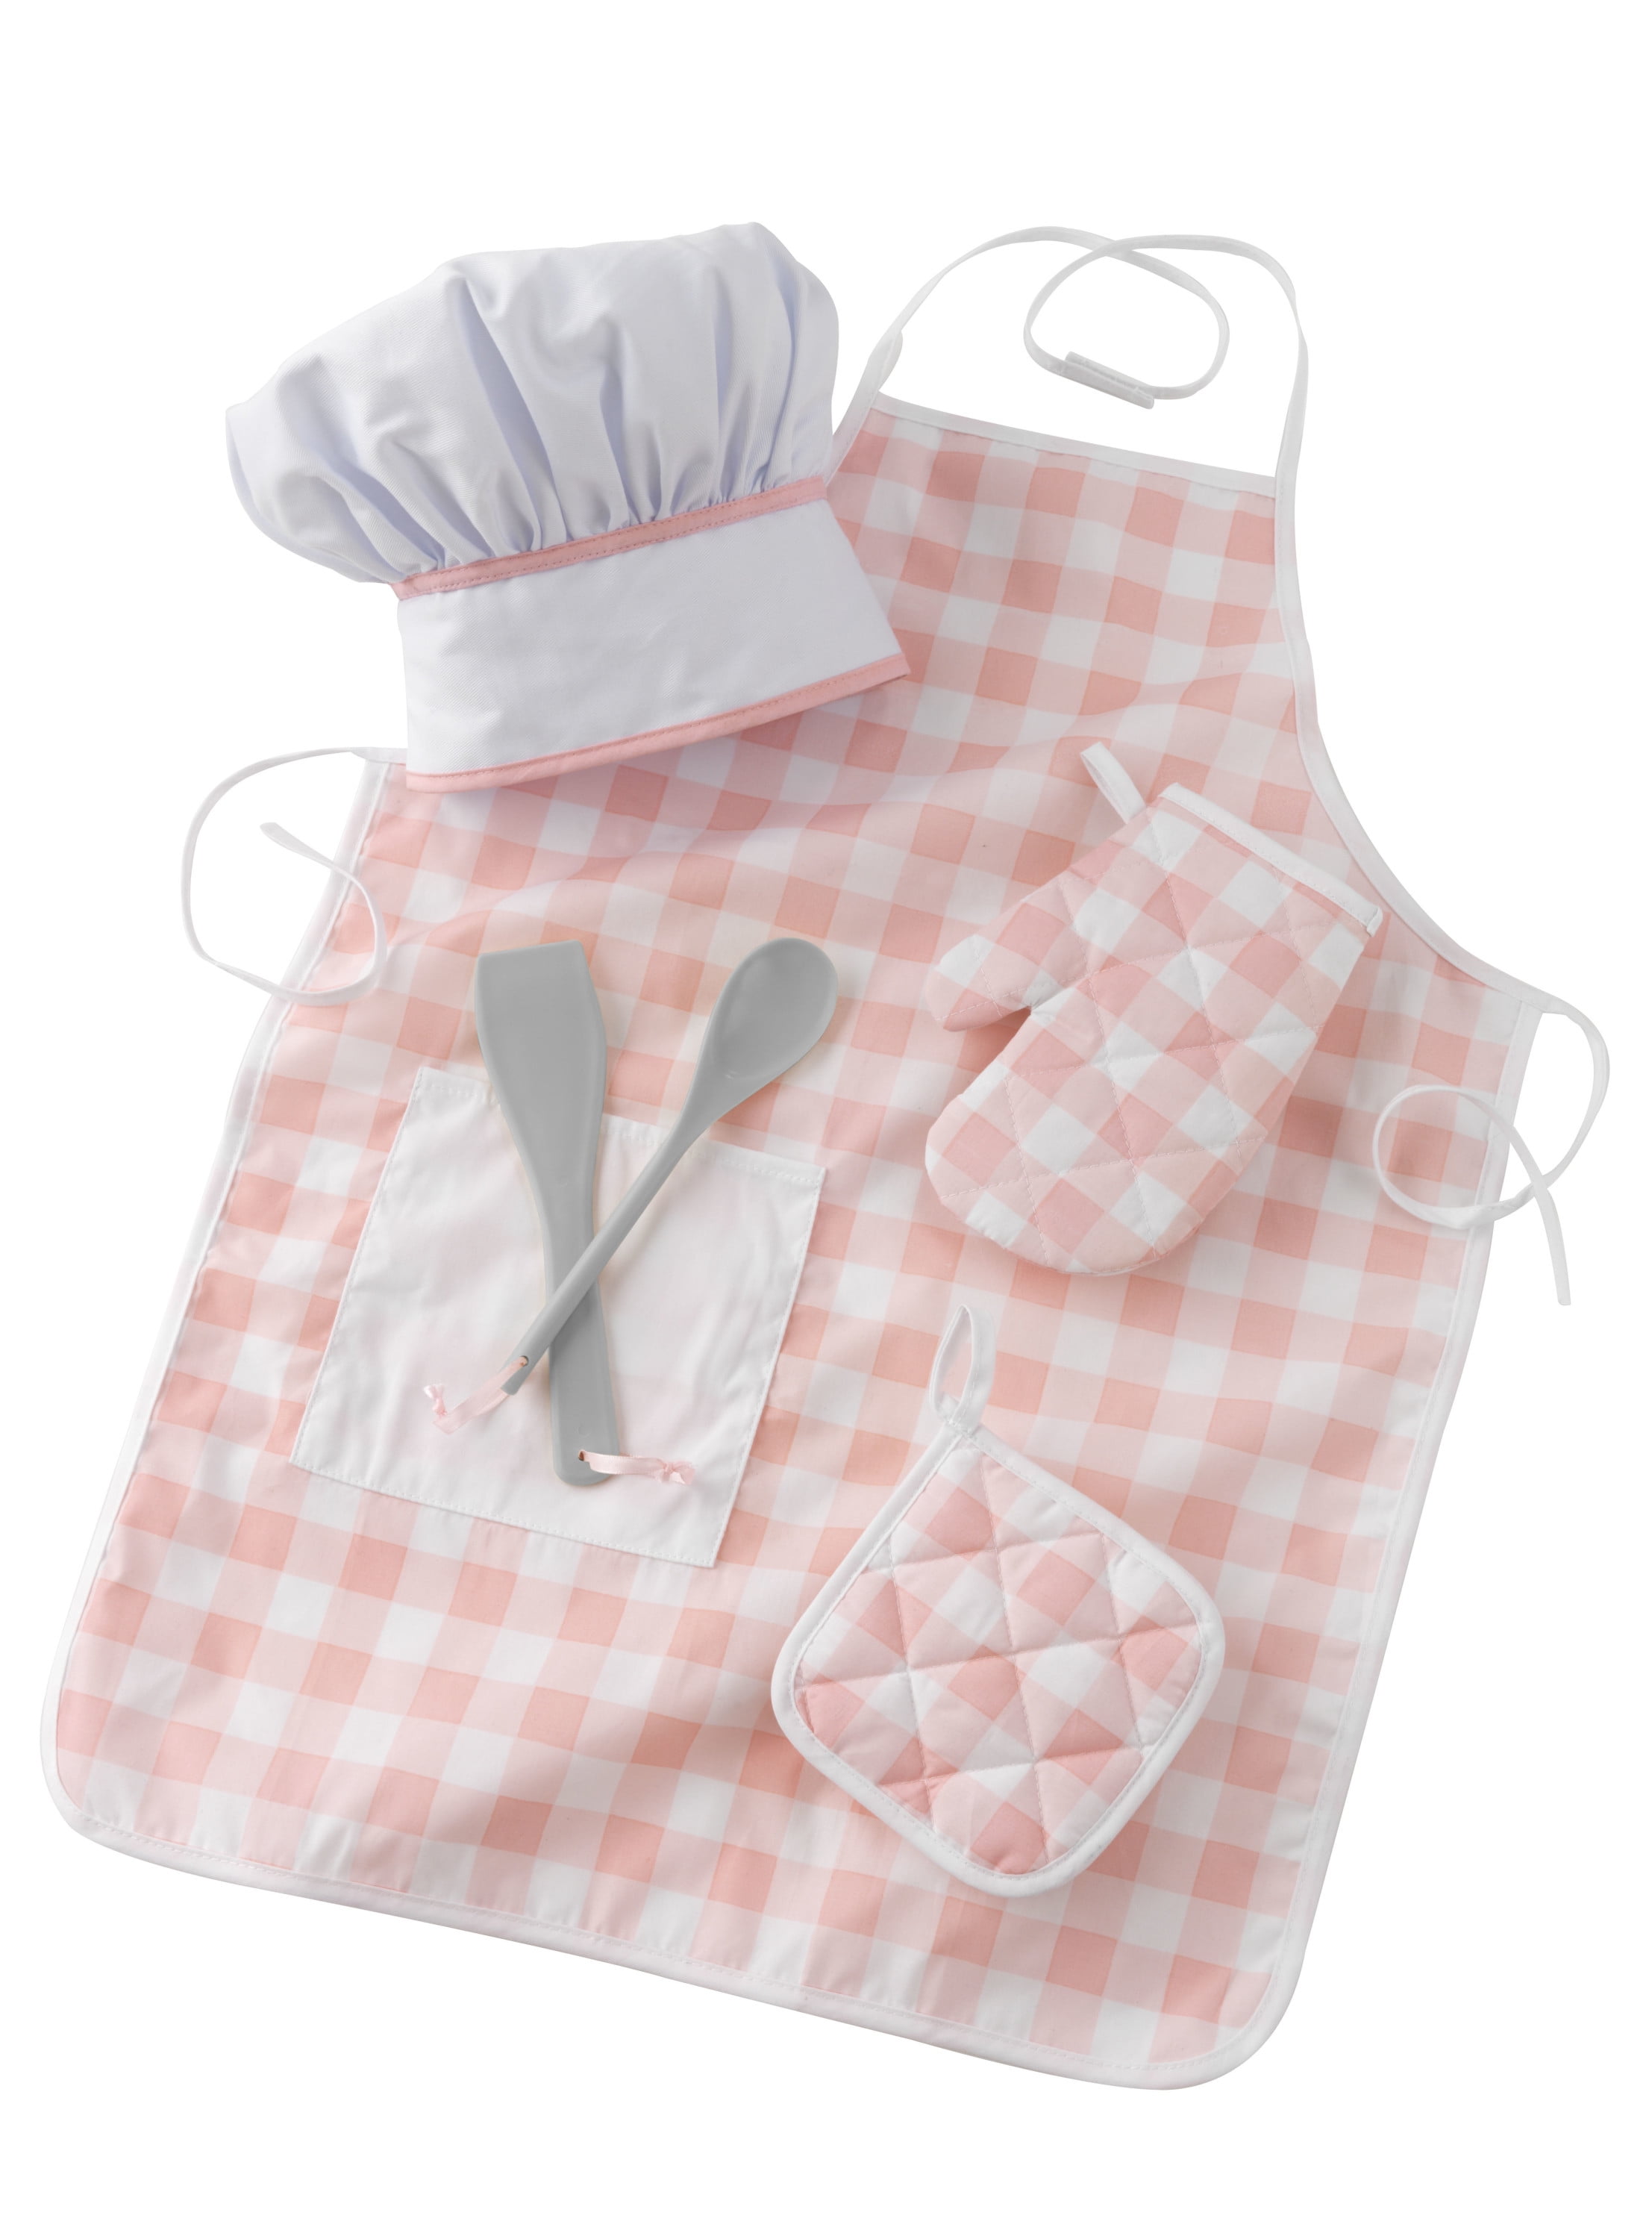 Spatul Oven Mitt;Potholder Apron Kidkraft Pink Chef Accessory Set Chef's Hat 